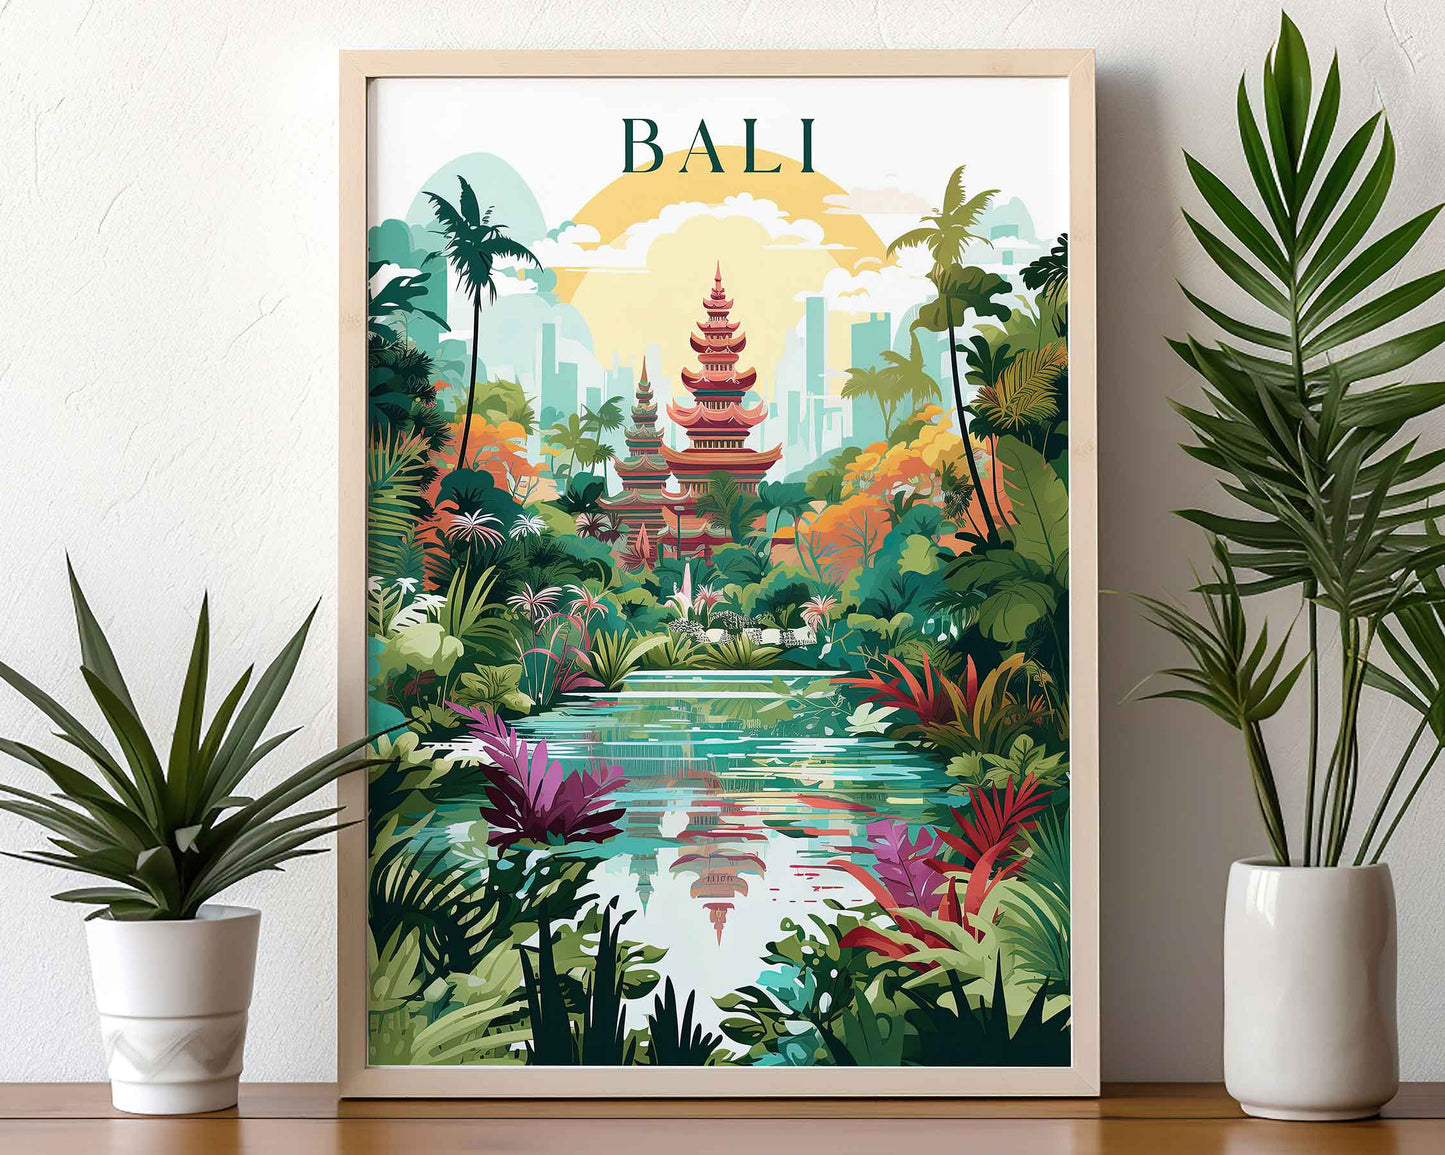 Framed Image of Bali Indonesia Travel Poster Prints Wall Art Illustration